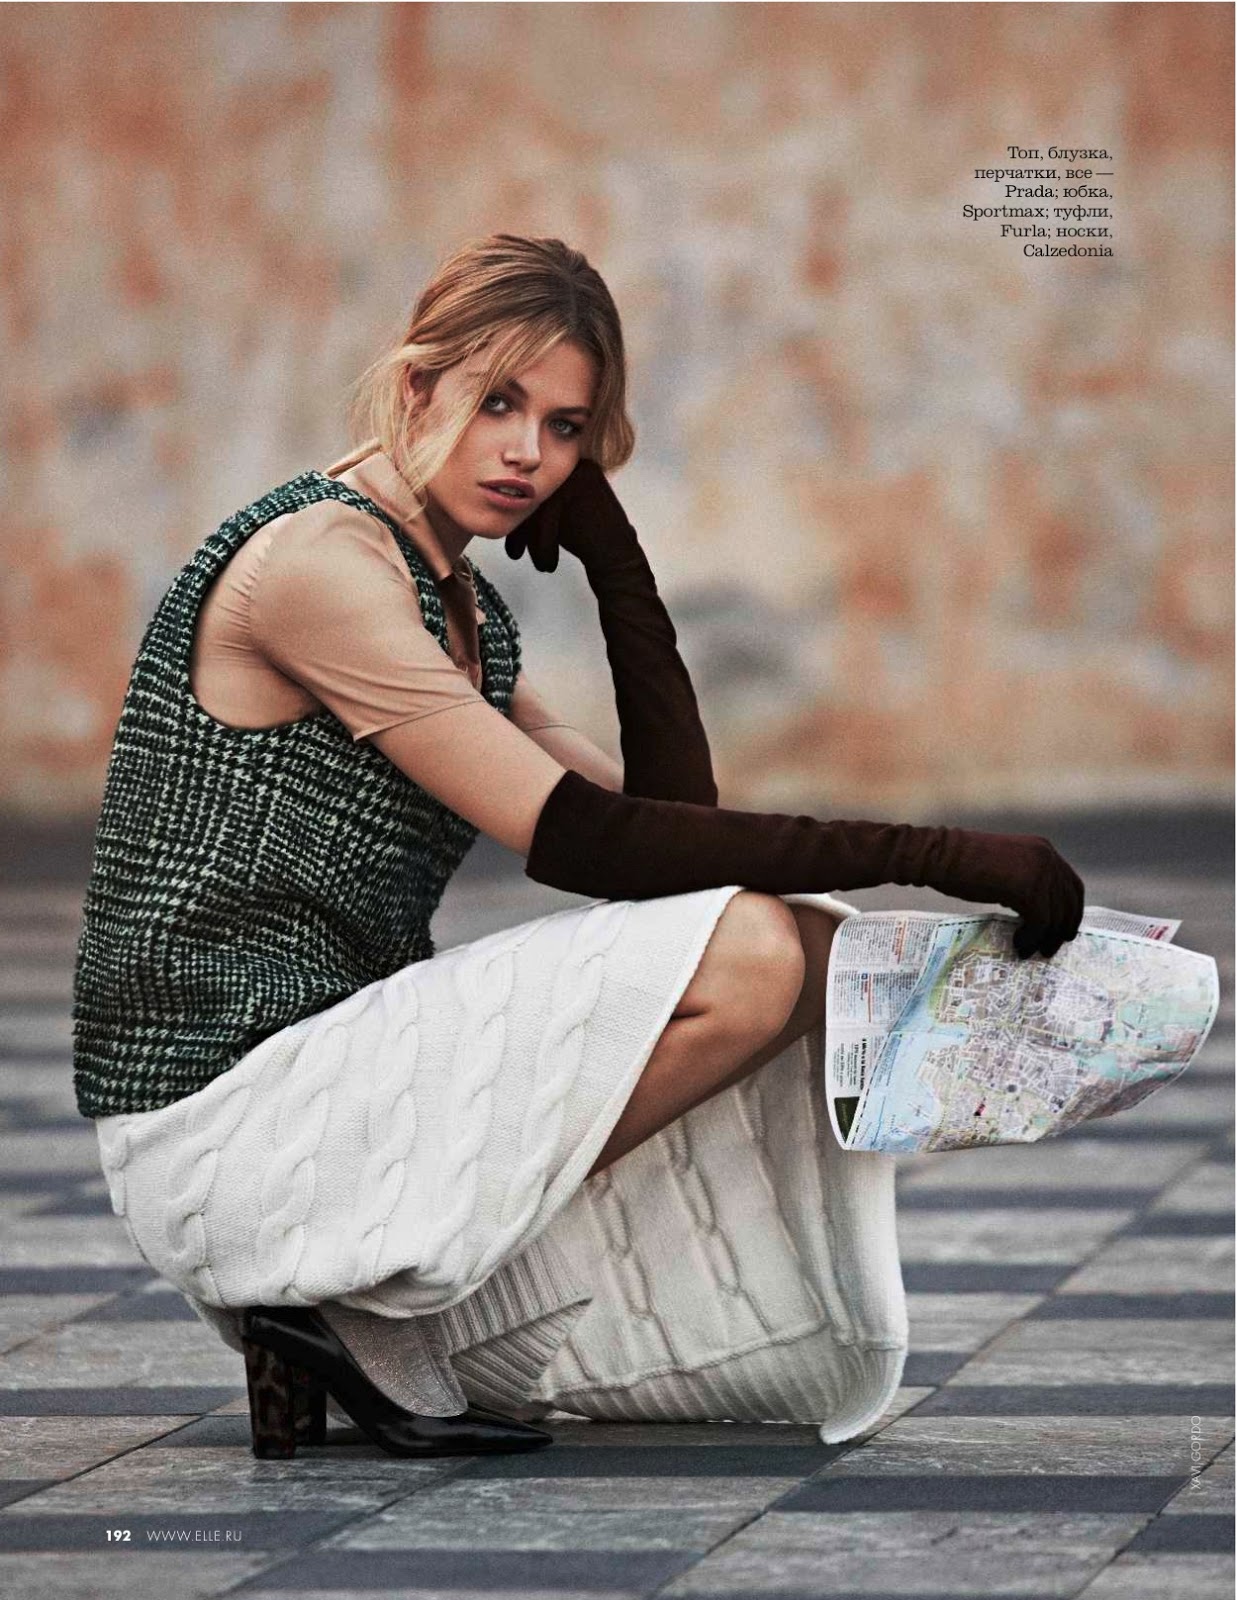 tblog130241: Fashion Model @ Hailey Clauson by Xavi Gordo for Elle ...